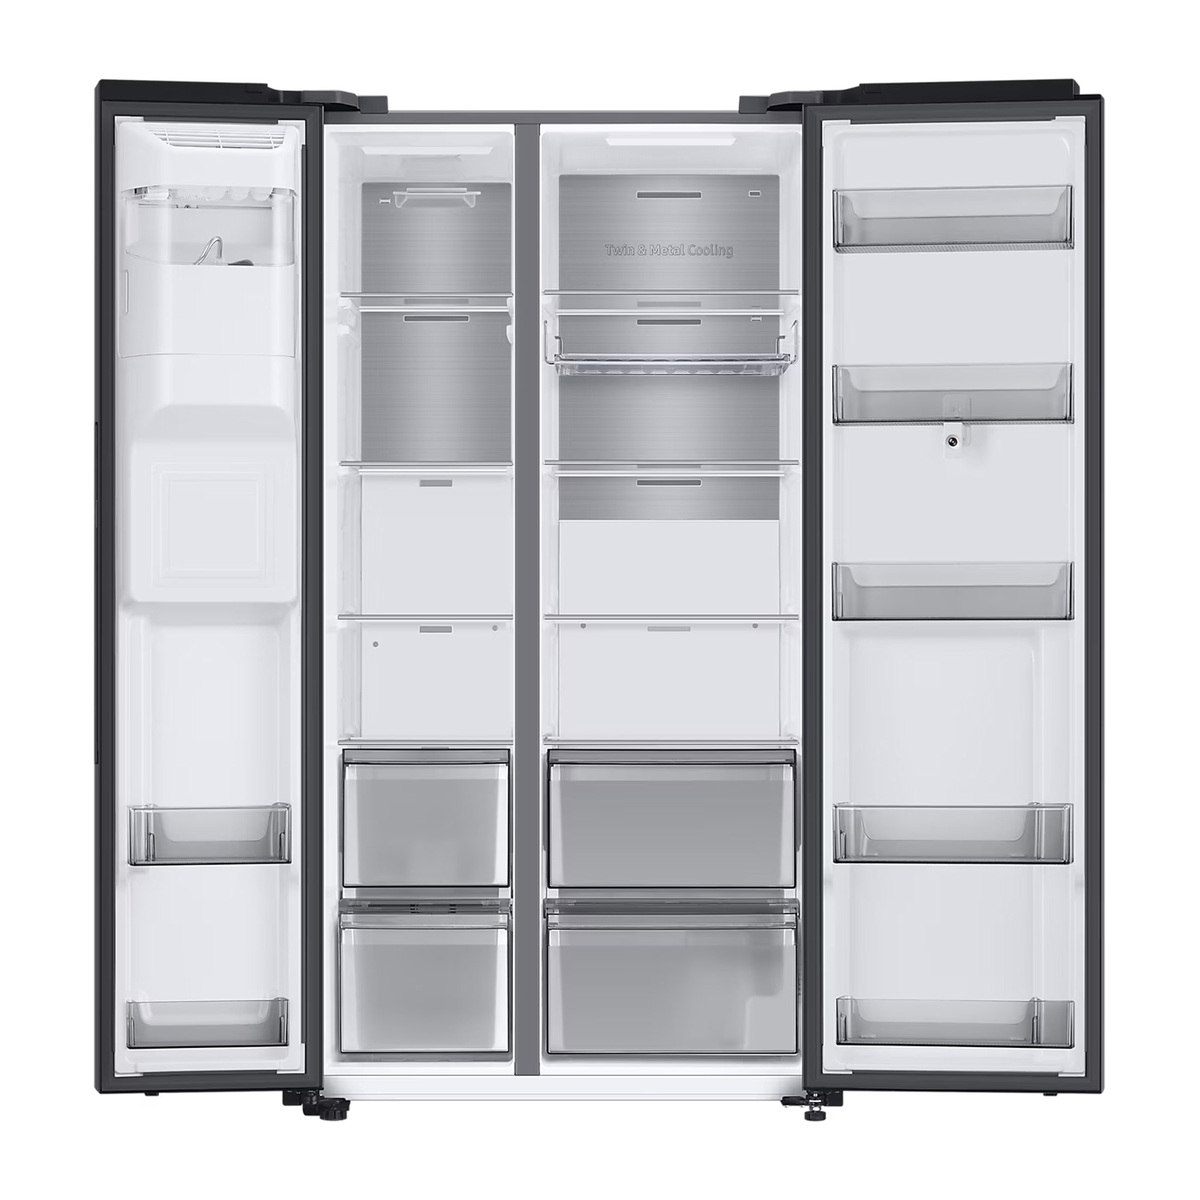 Samsung Side by Side Refrigerator with Family Hub, 591 L, Black, RS6HA8891B1AE